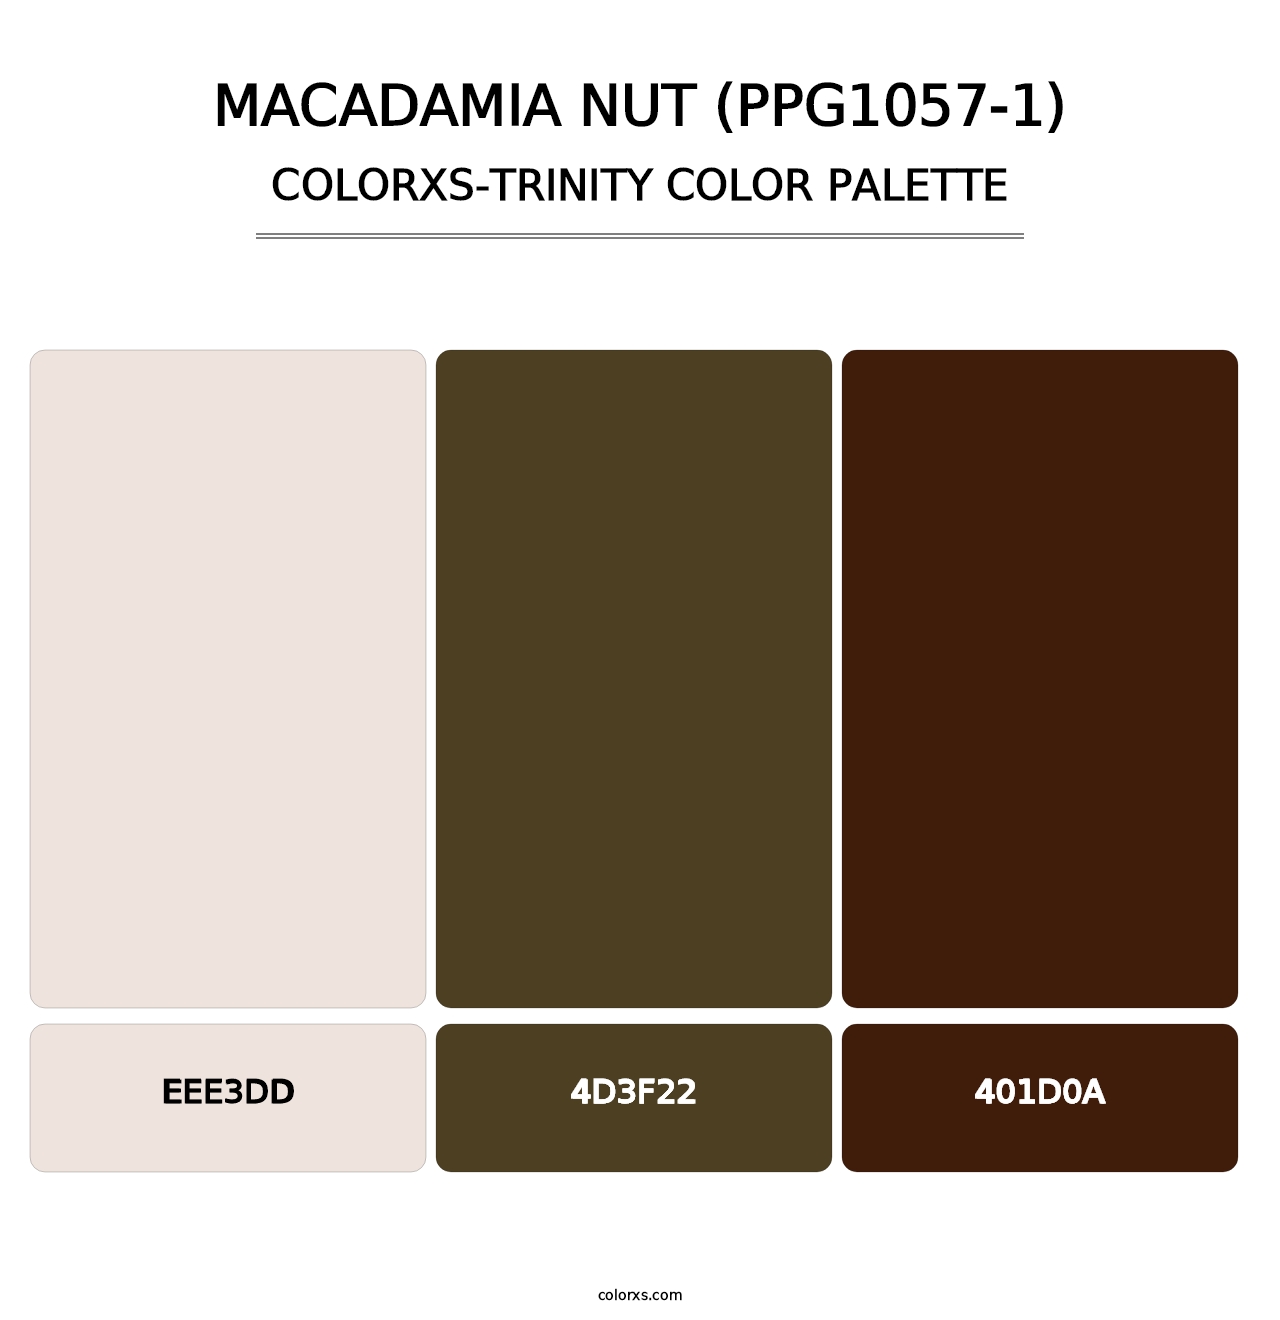 Macadamia Nut (PPG1057-1) - Colorxs Trinity Palette